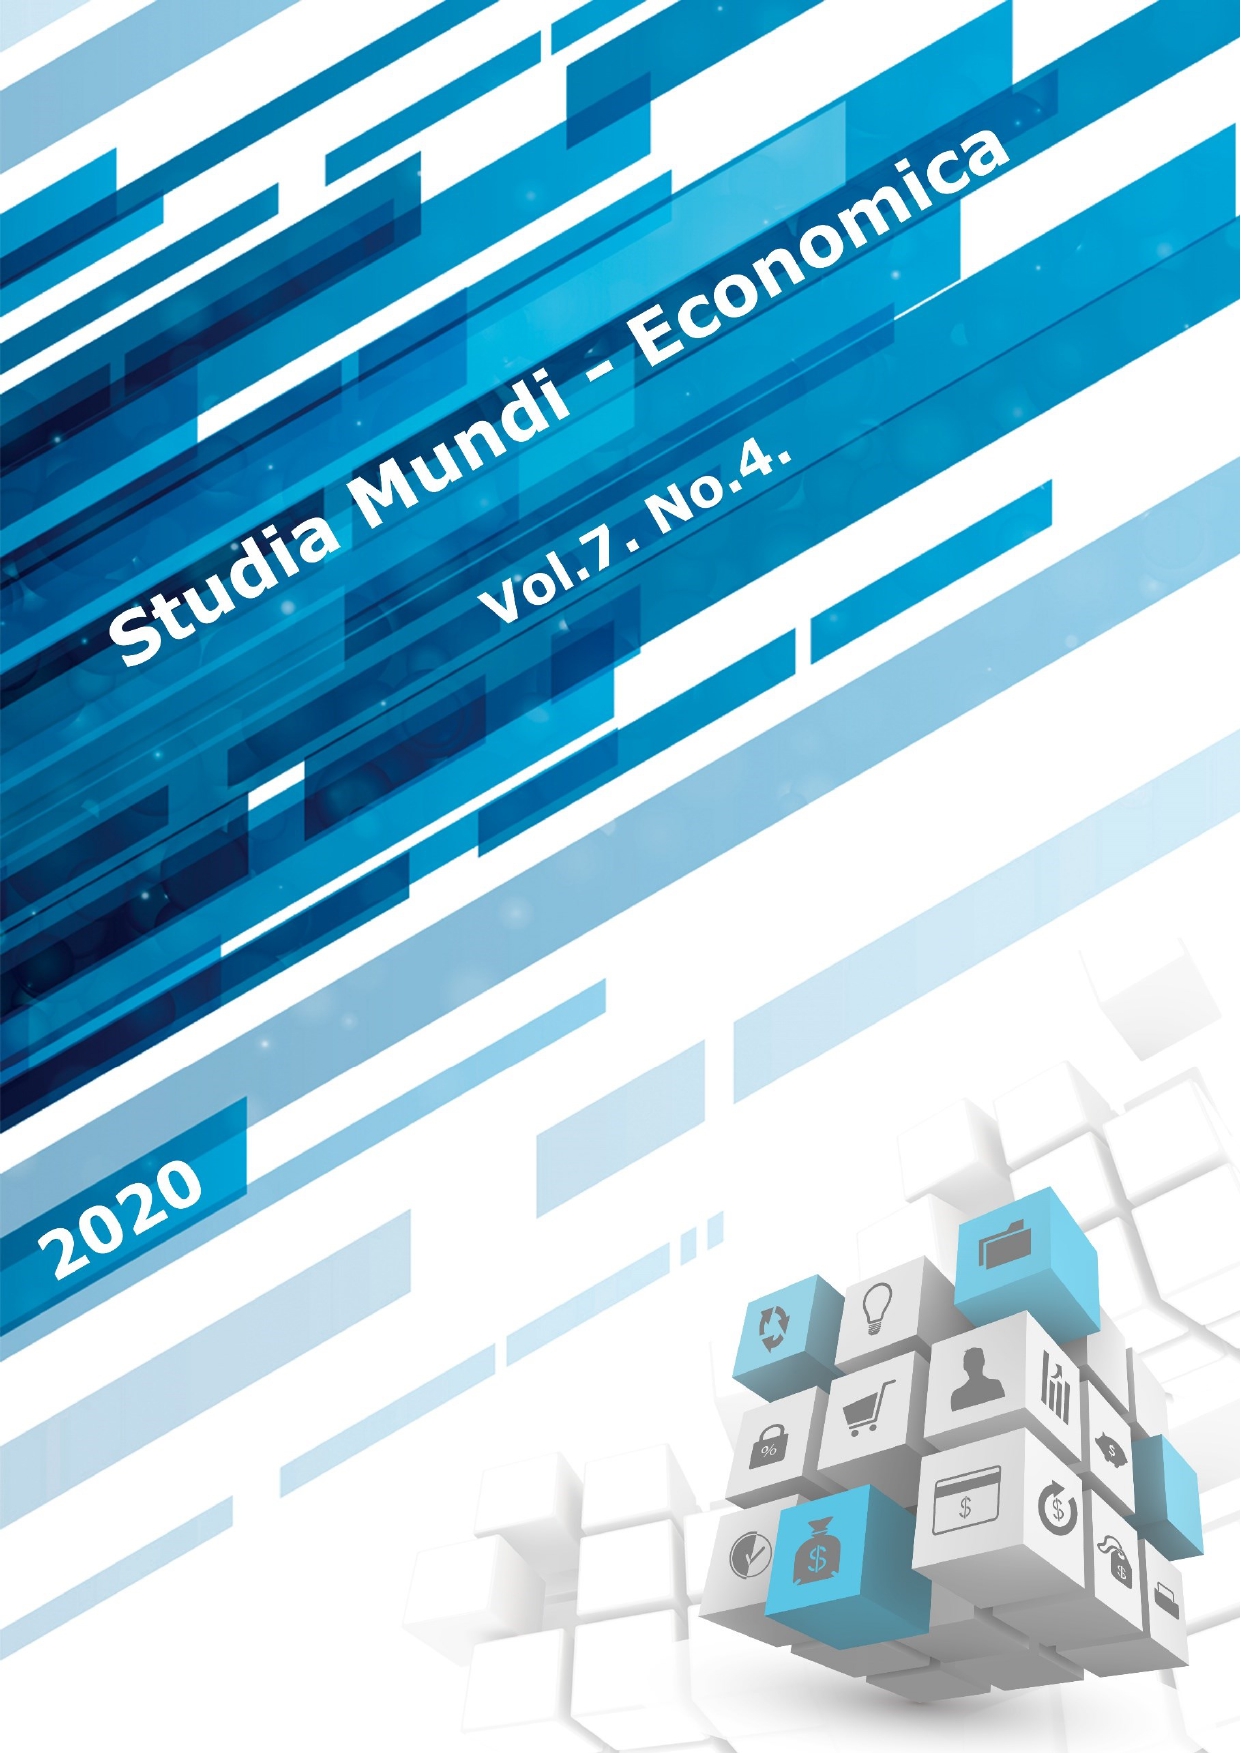 					View Évf. 7 Szám 4 (2020): Studia Mundi – Economica
				